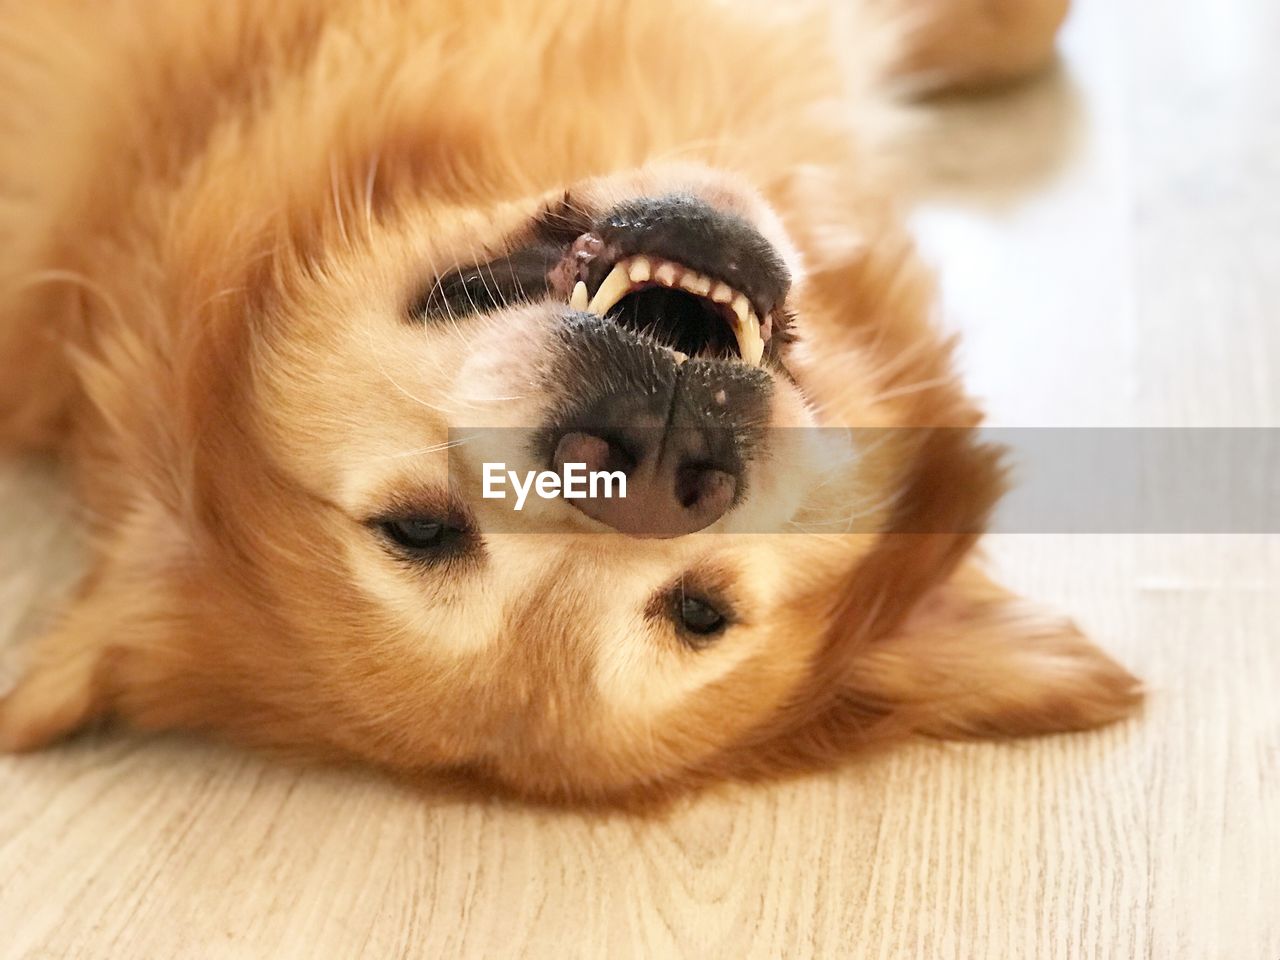 Close-up portrait of dog sleeping on parquet floor